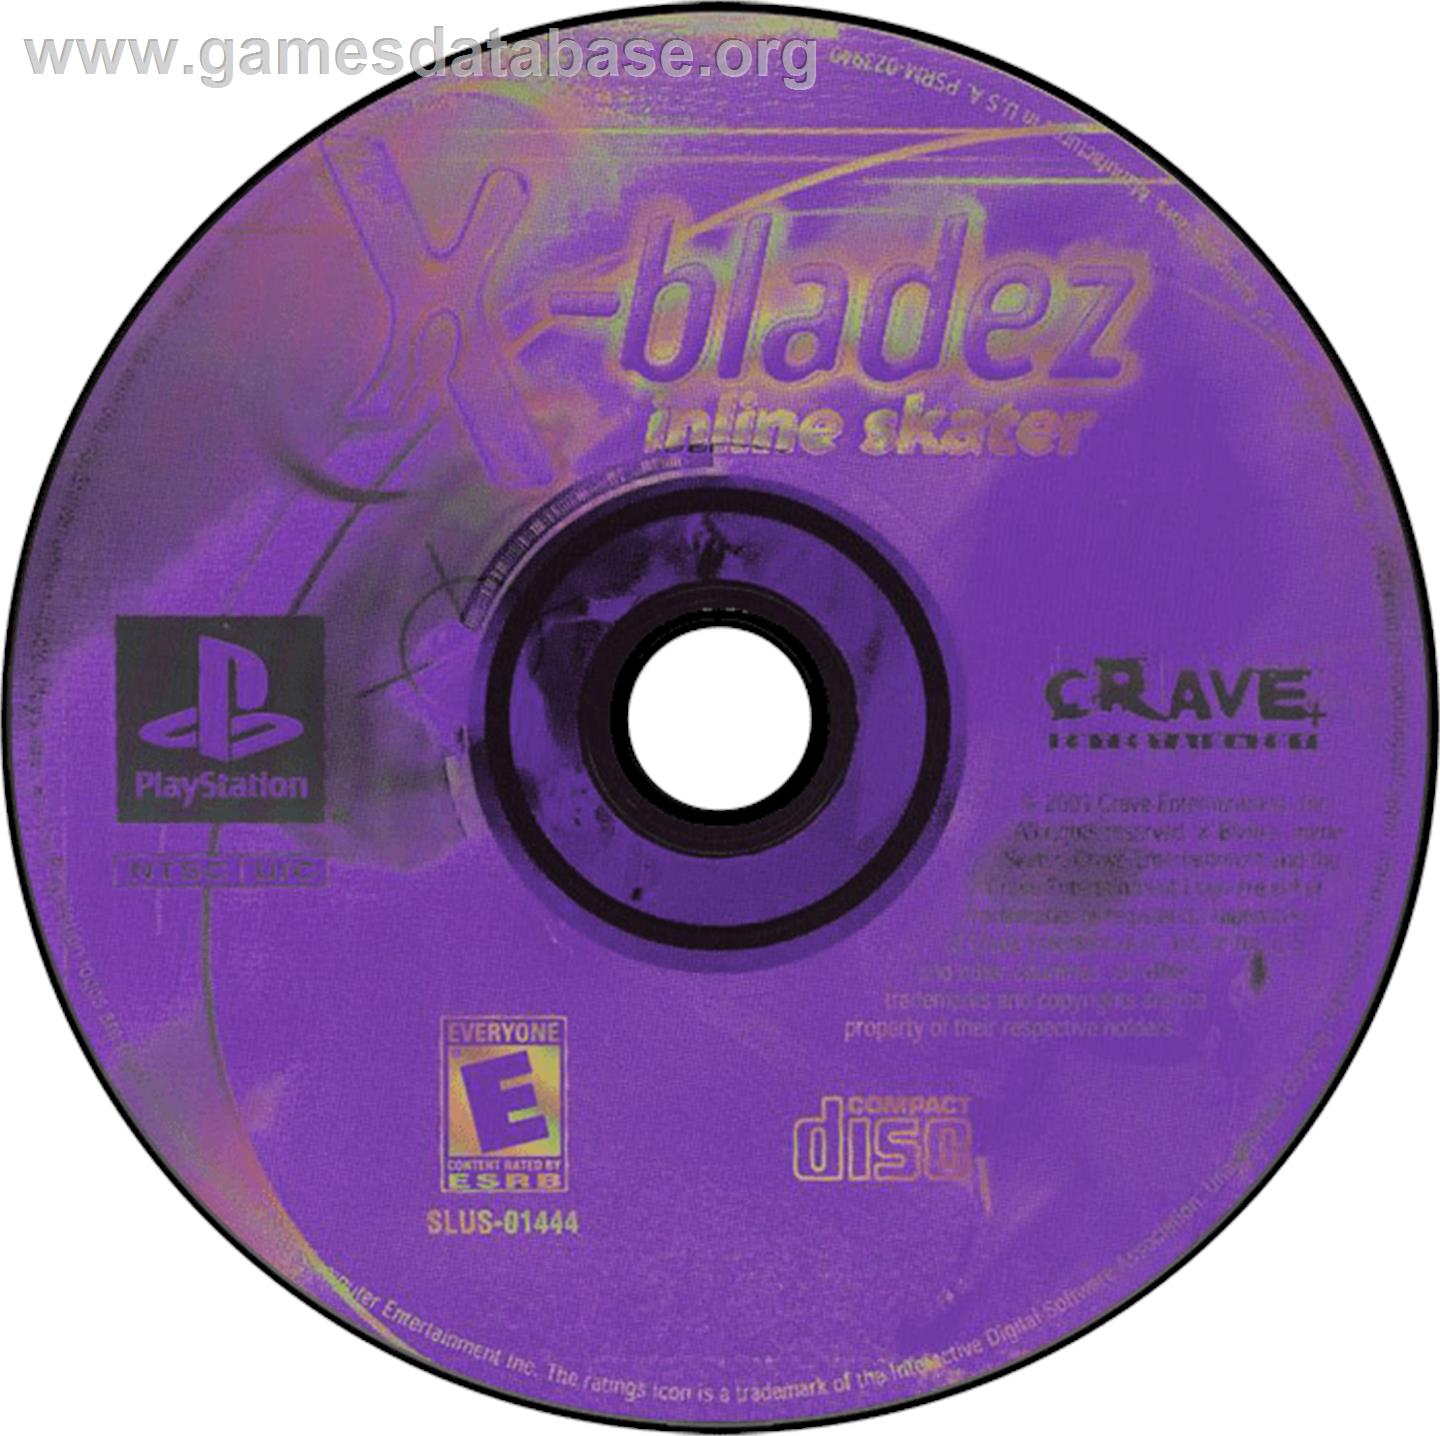 X-Bladez: Inline Skater - Sony Playstation - Artwork - Disc